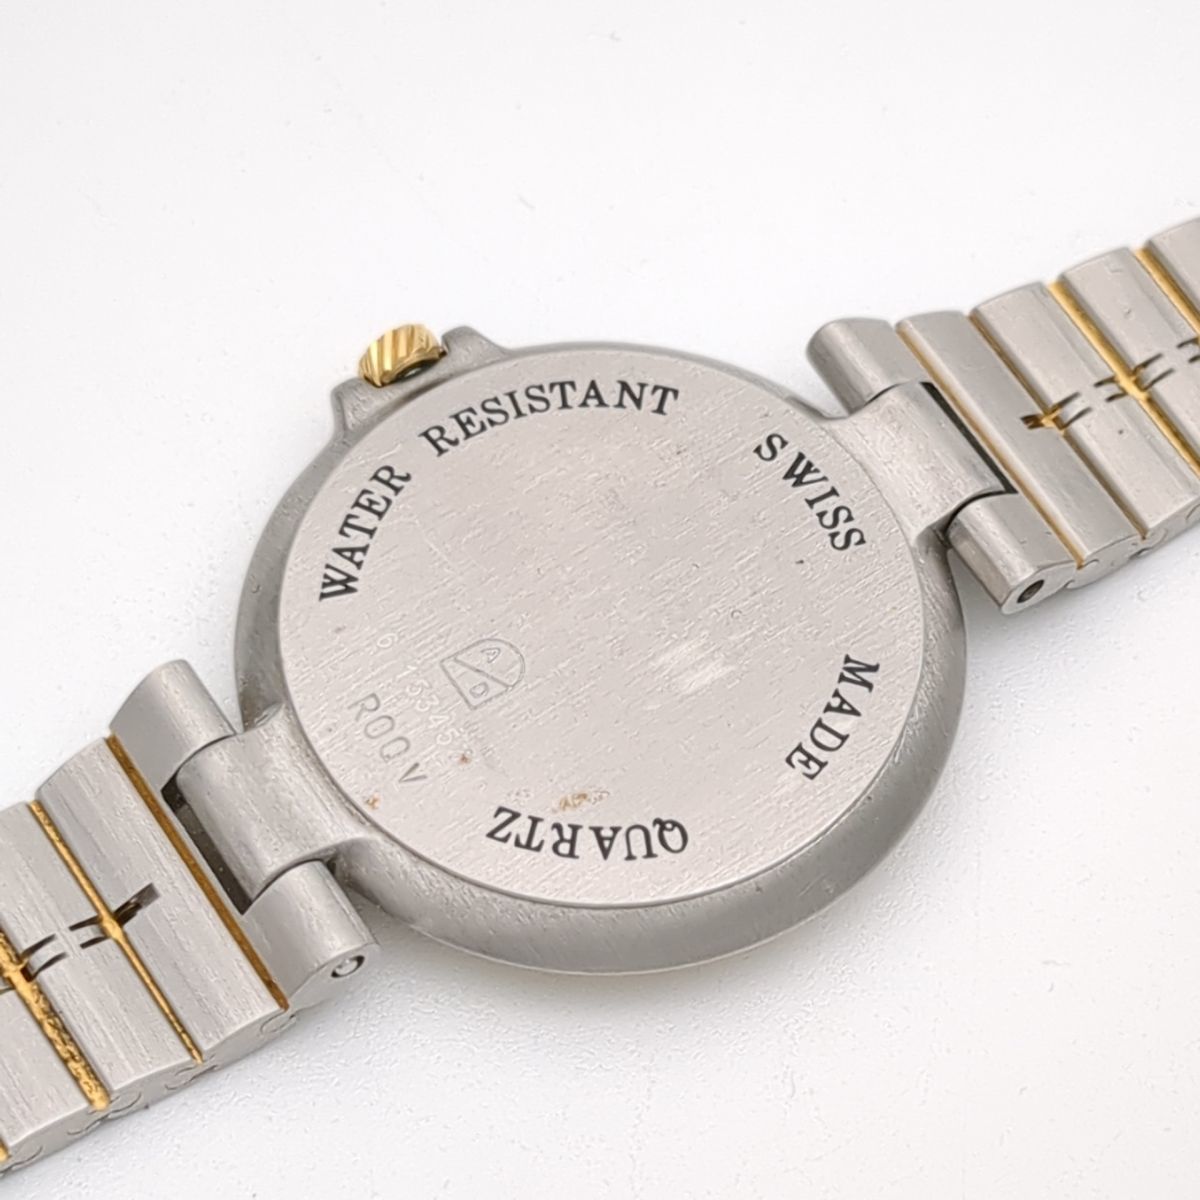  Dunhill millenium кварц diamond серебряный dial женский SS dunhill наручные часы б/у *3114/ высота . магазин 